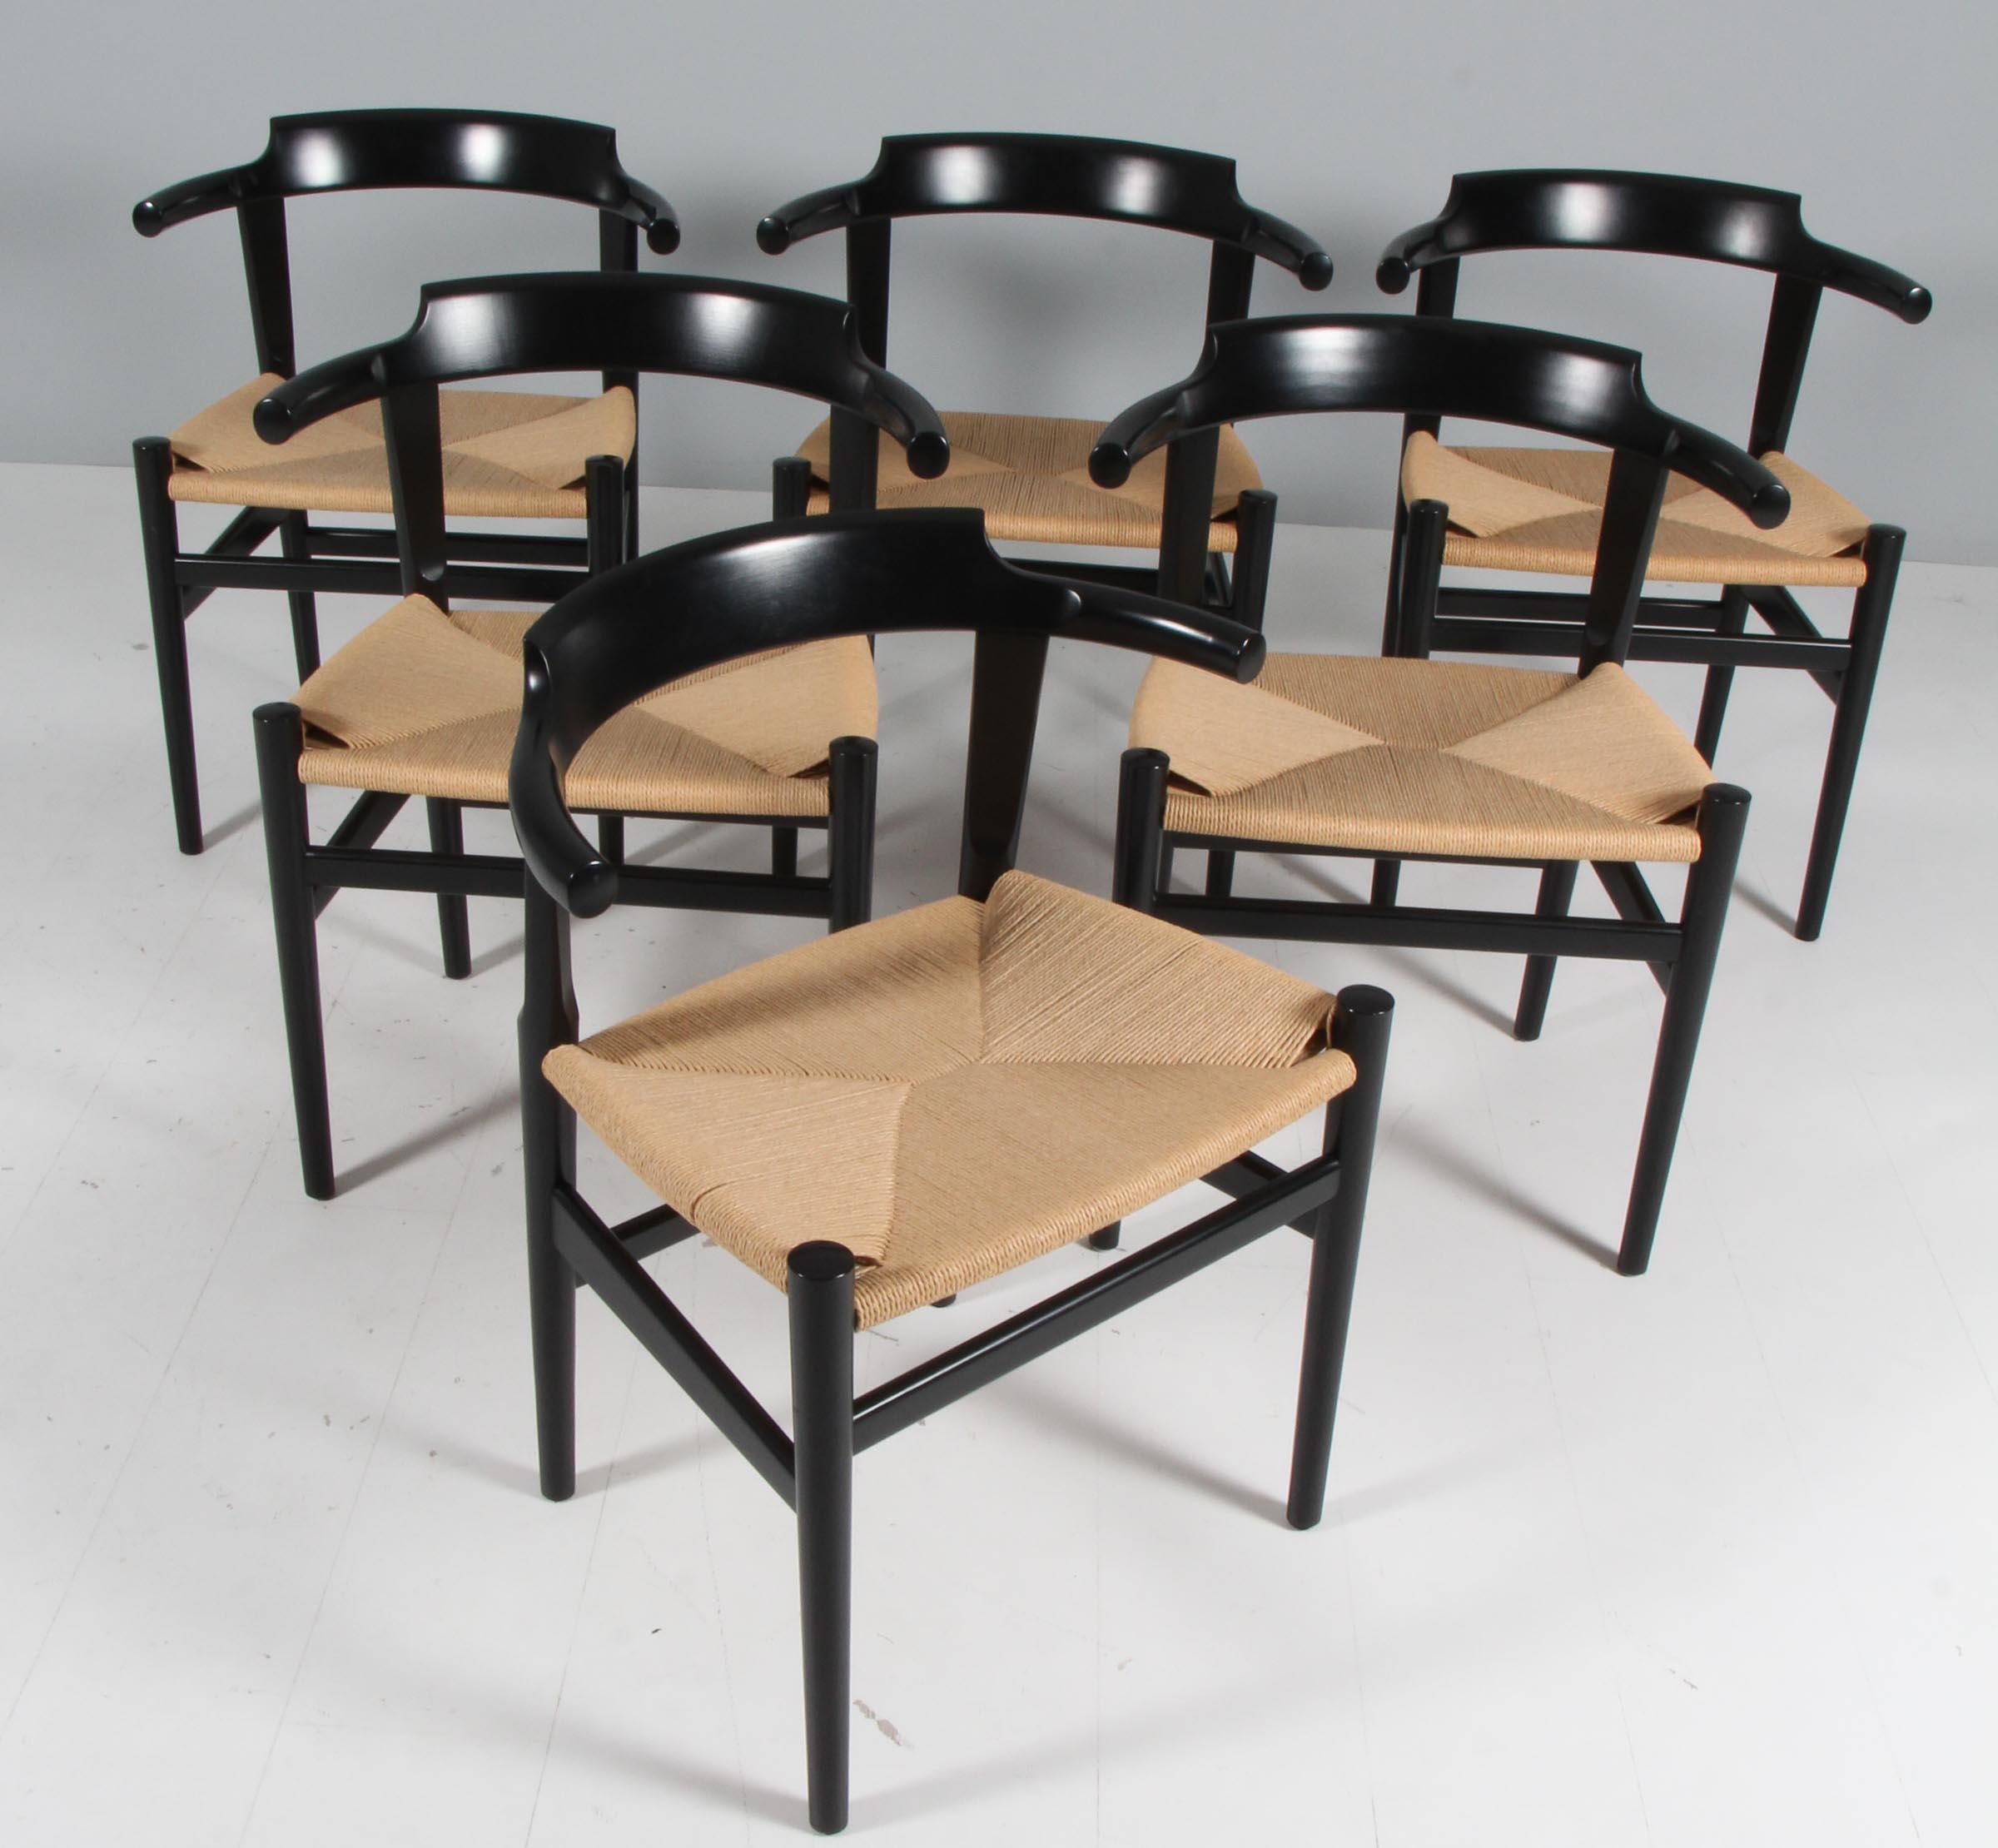 Hans J. Wegner sechs Sessel mit massivem lackiertem Gestell

Original dänische Papierkordelsitze.

Modell PP68, hergestellt von PP Møbler.